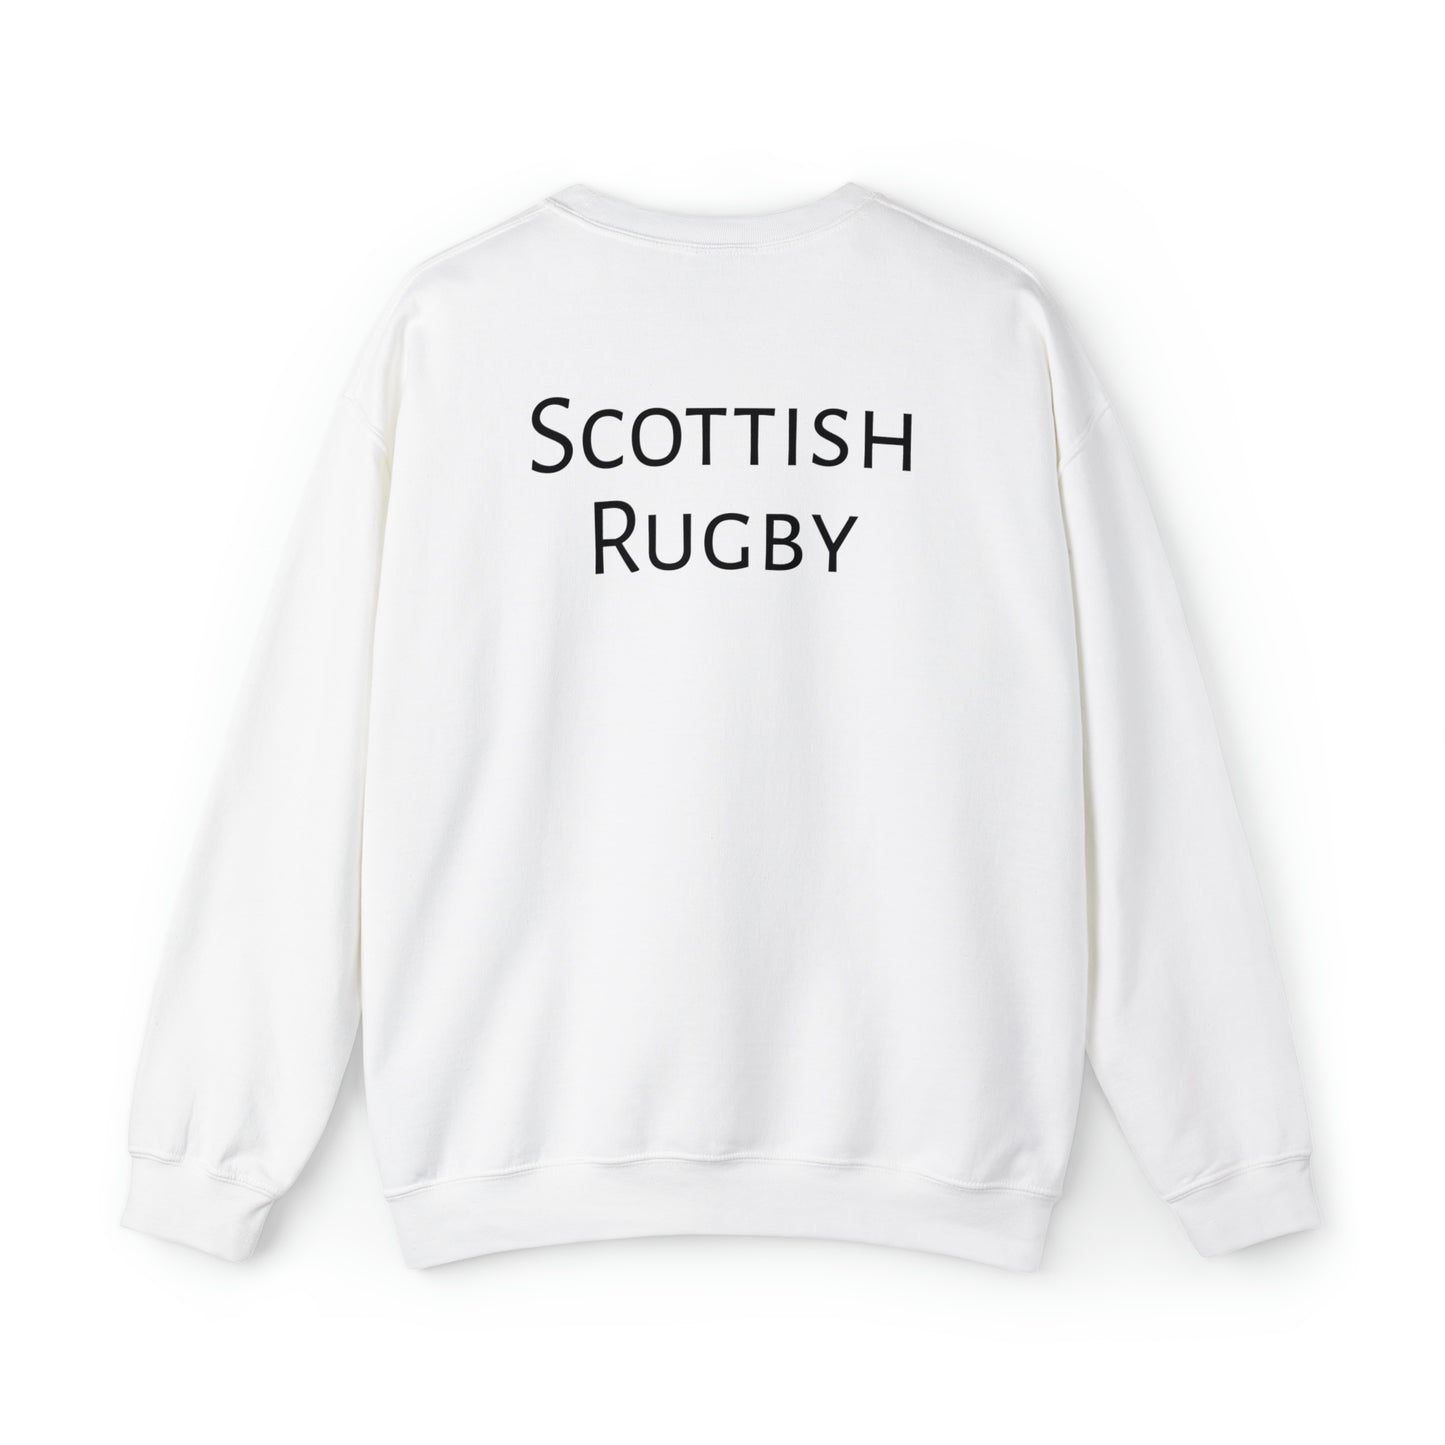 Ready Scotland - light sweatshirts